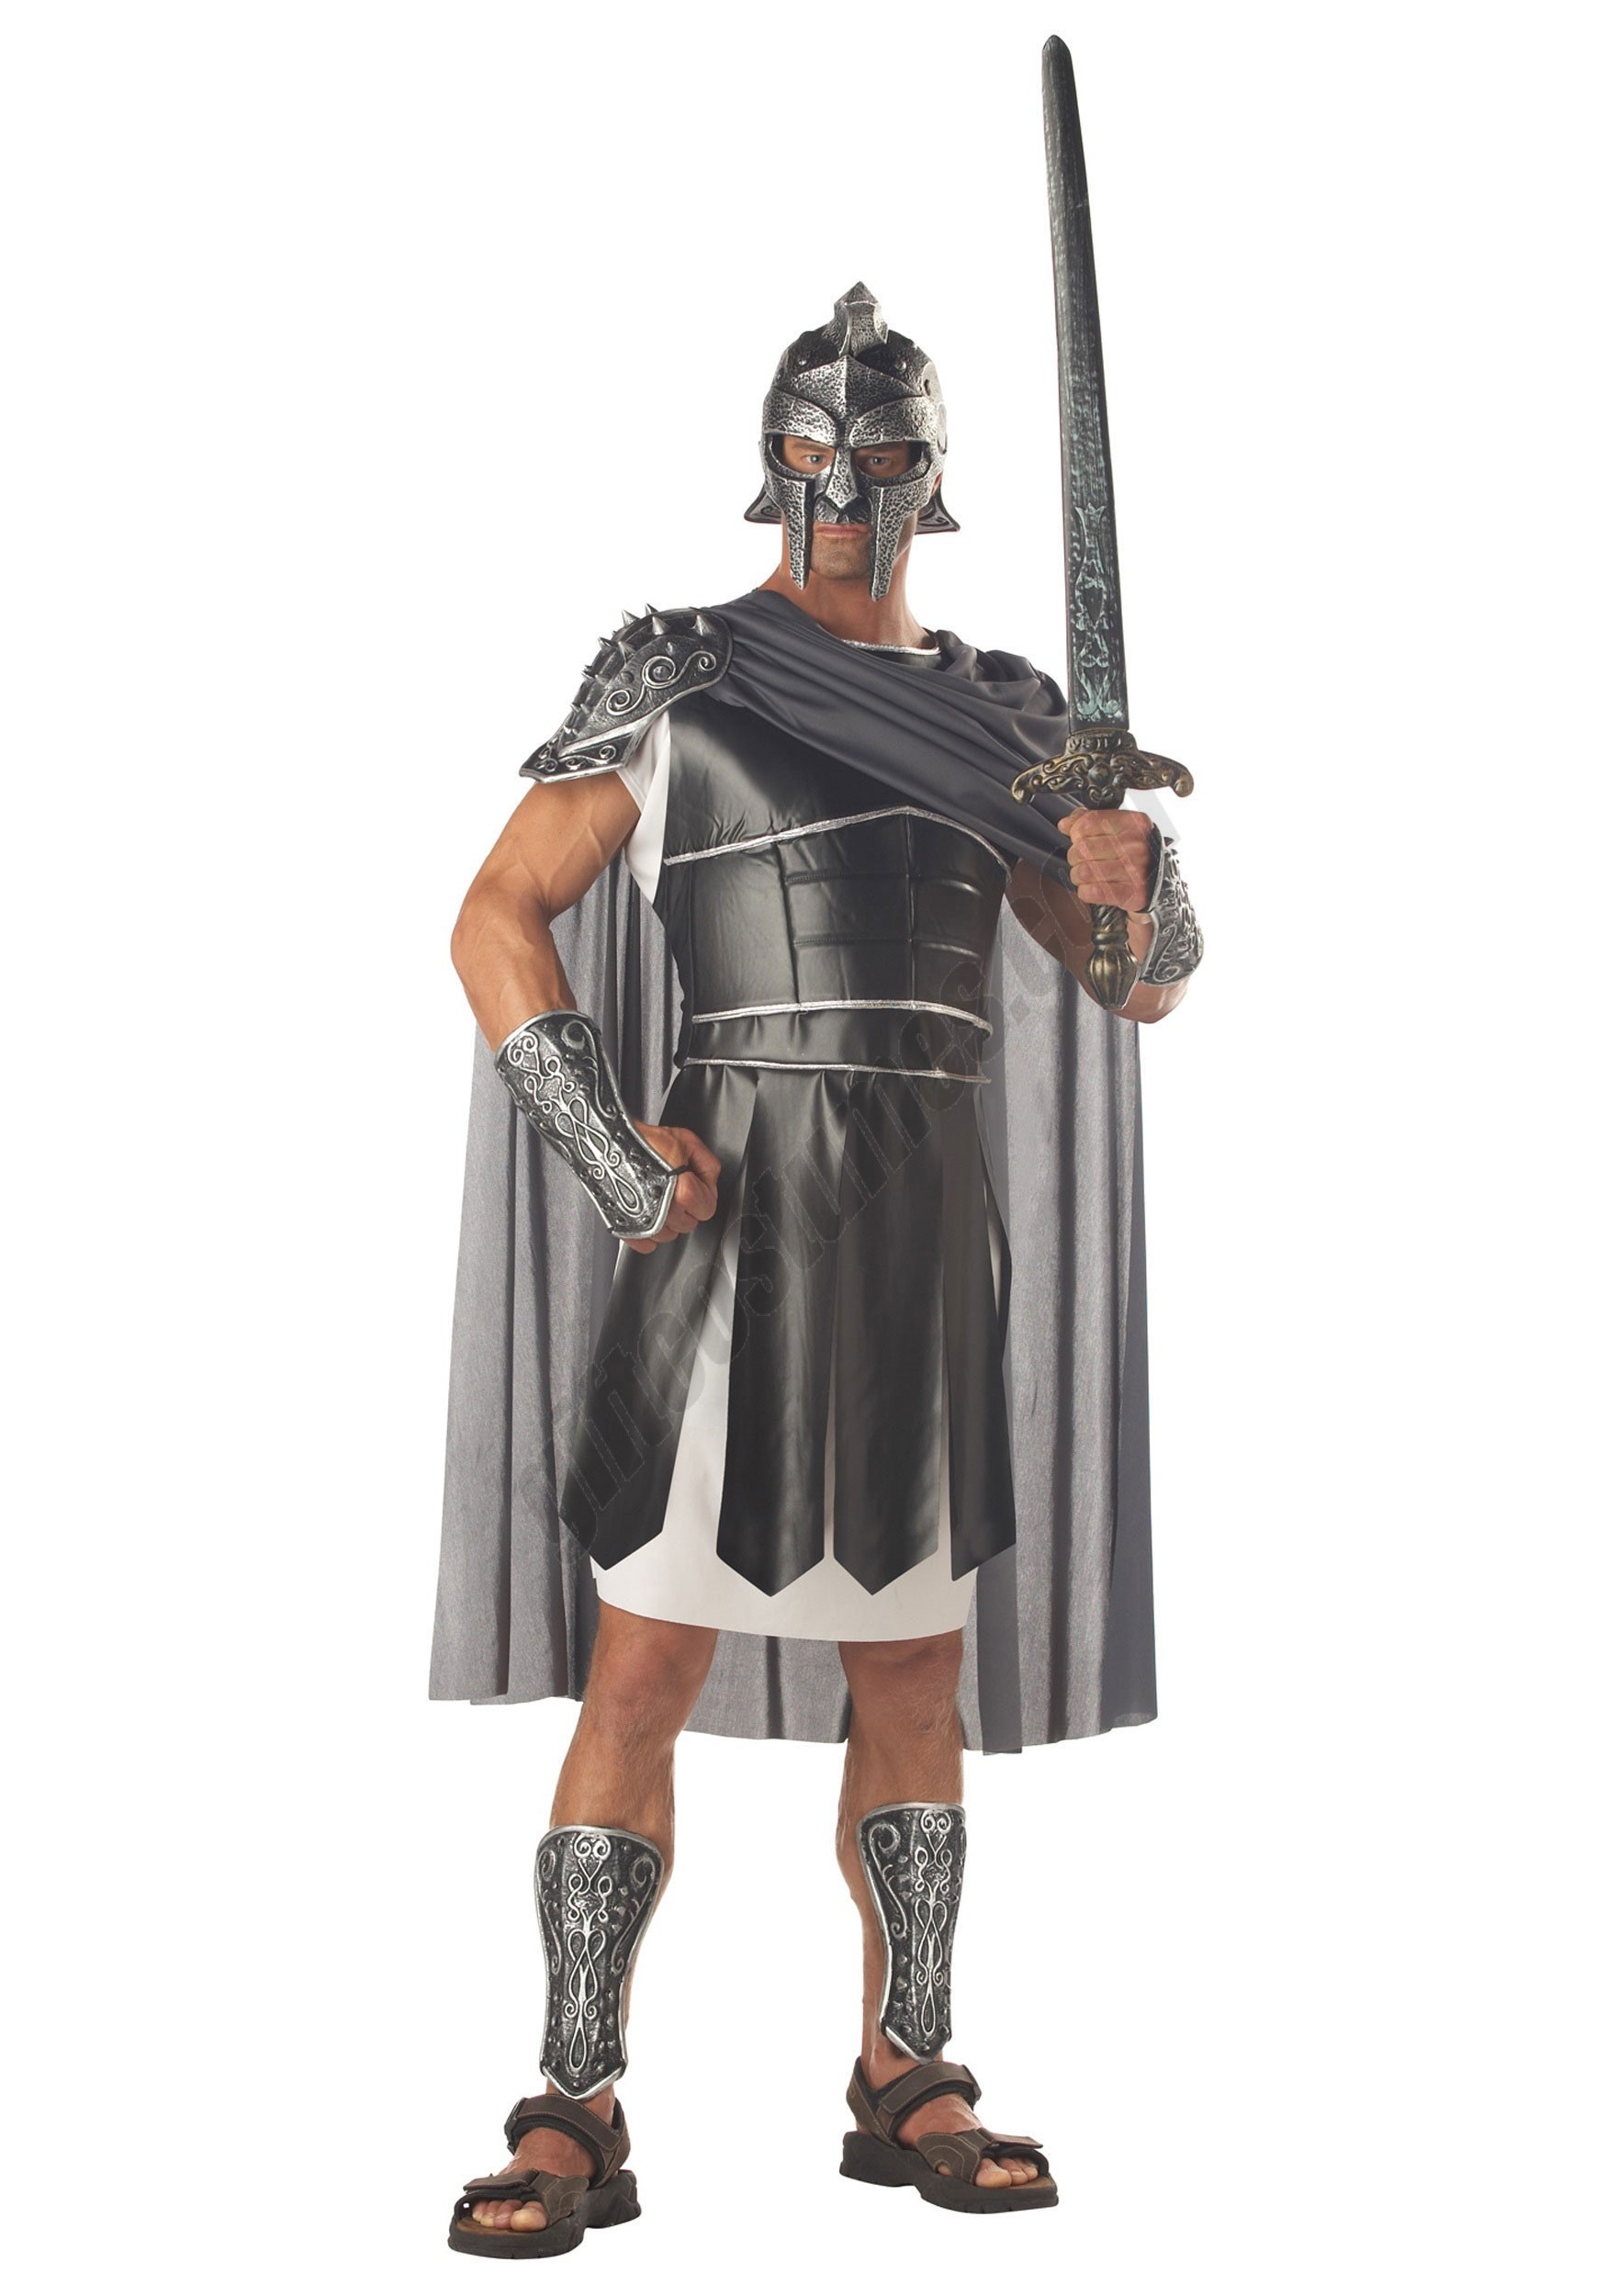 Adult Centurion Costume Promotions - Adult Centurion Costume Promotions